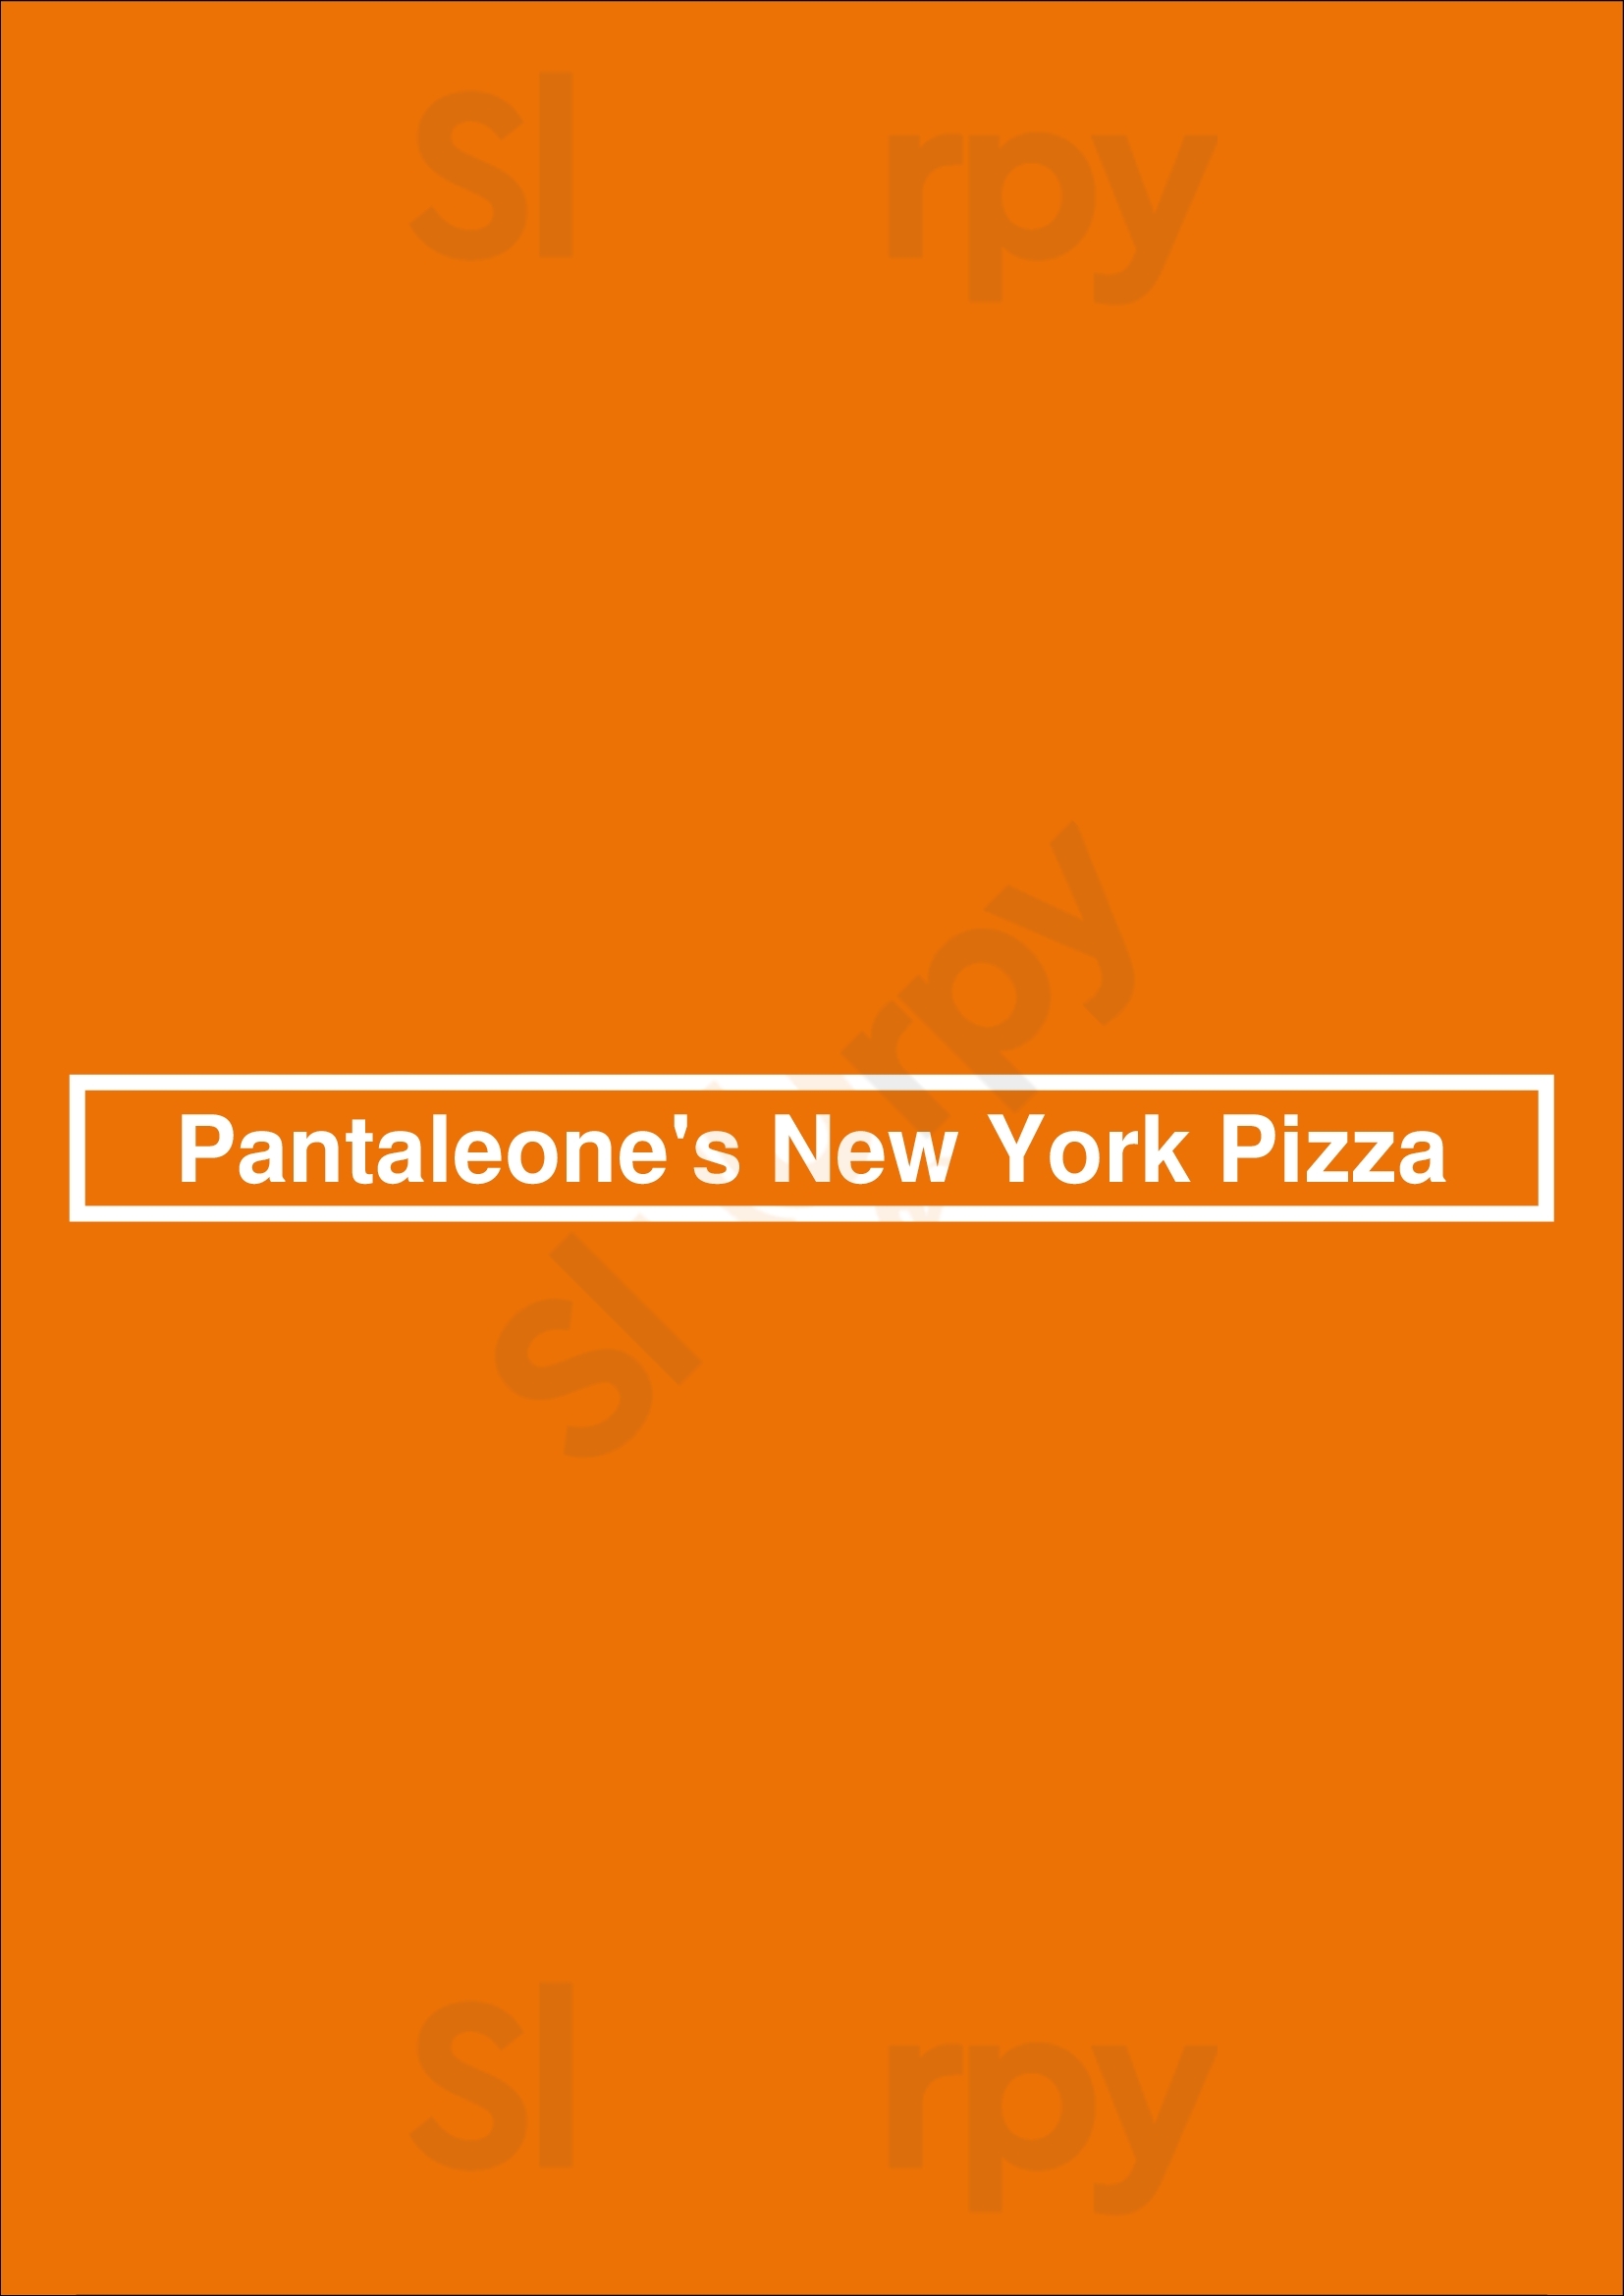 Pantaleone's New York Pizza Denver Menu - 1